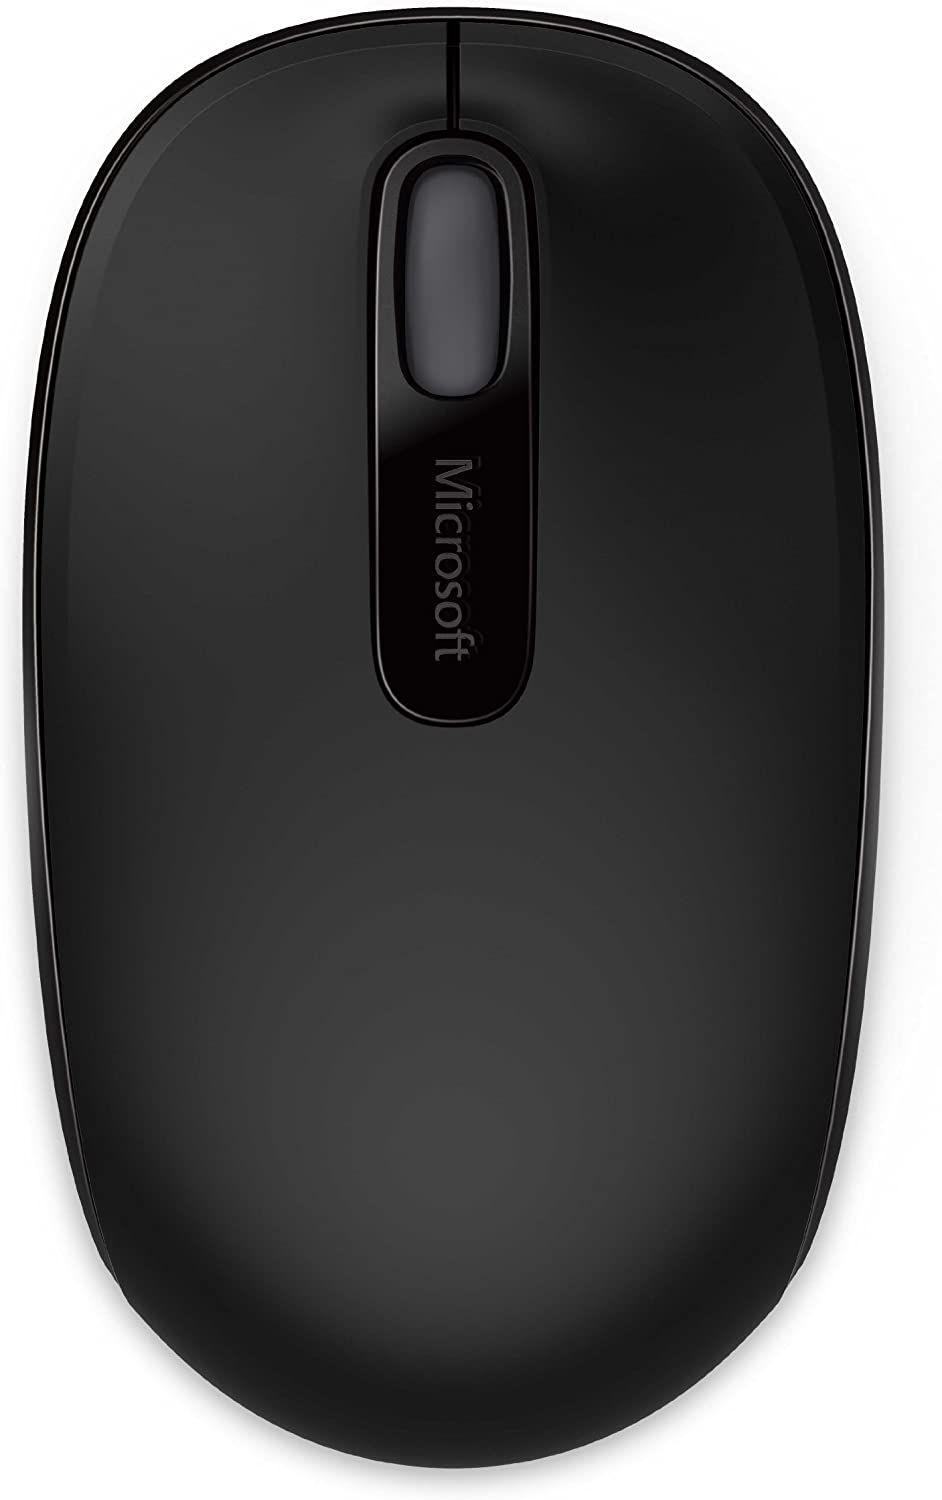 Microsoft Wireless Portable Mouse 1850 - Black